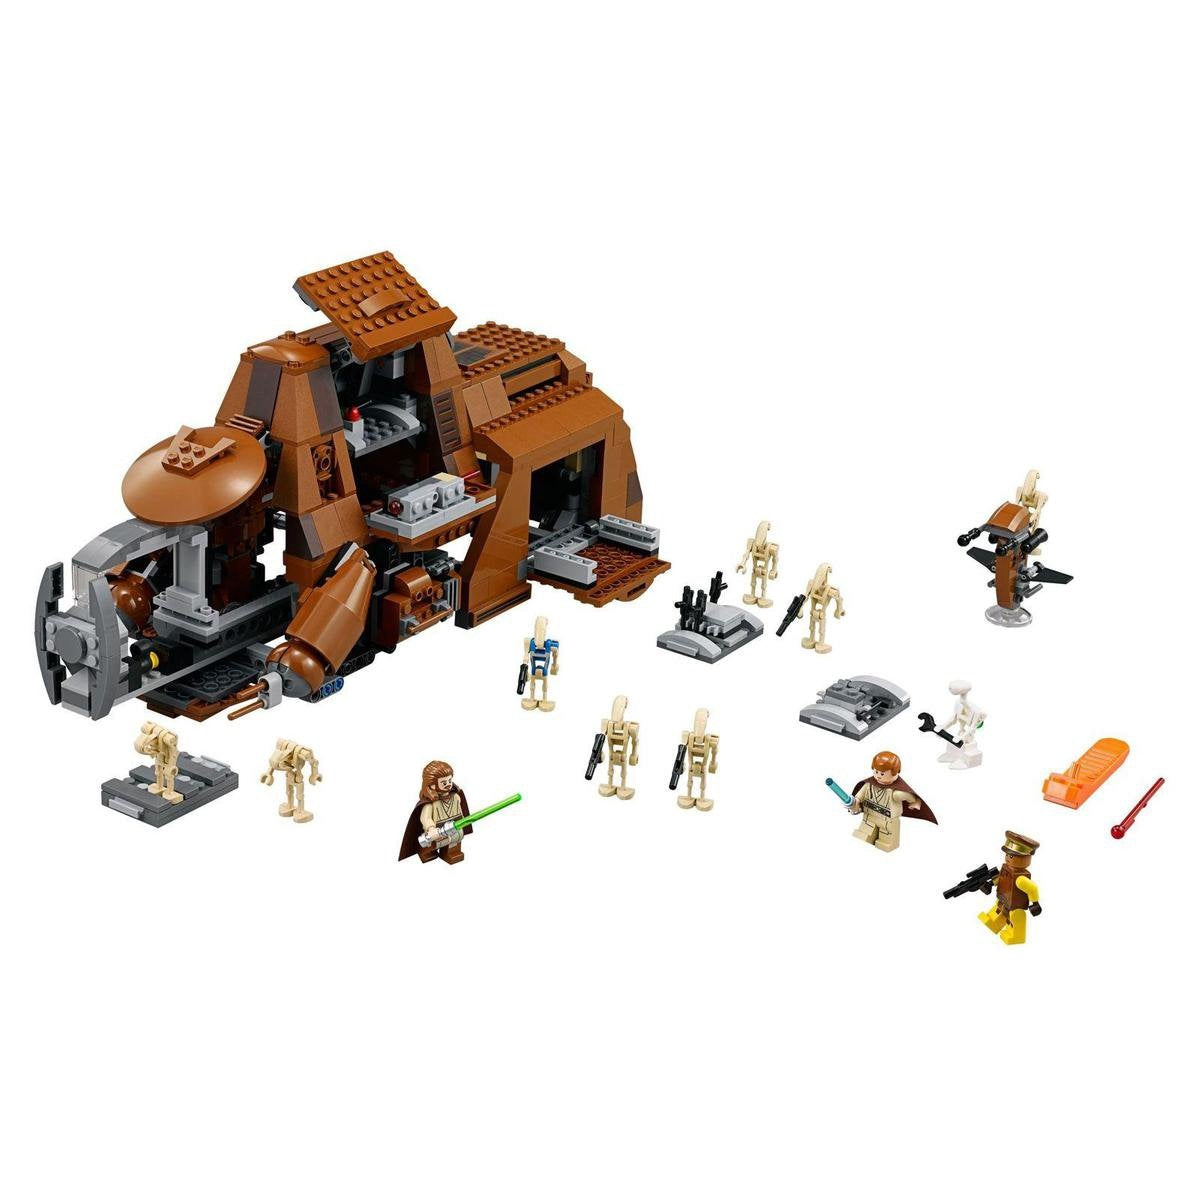 LEGO Star Wars MTT 75058